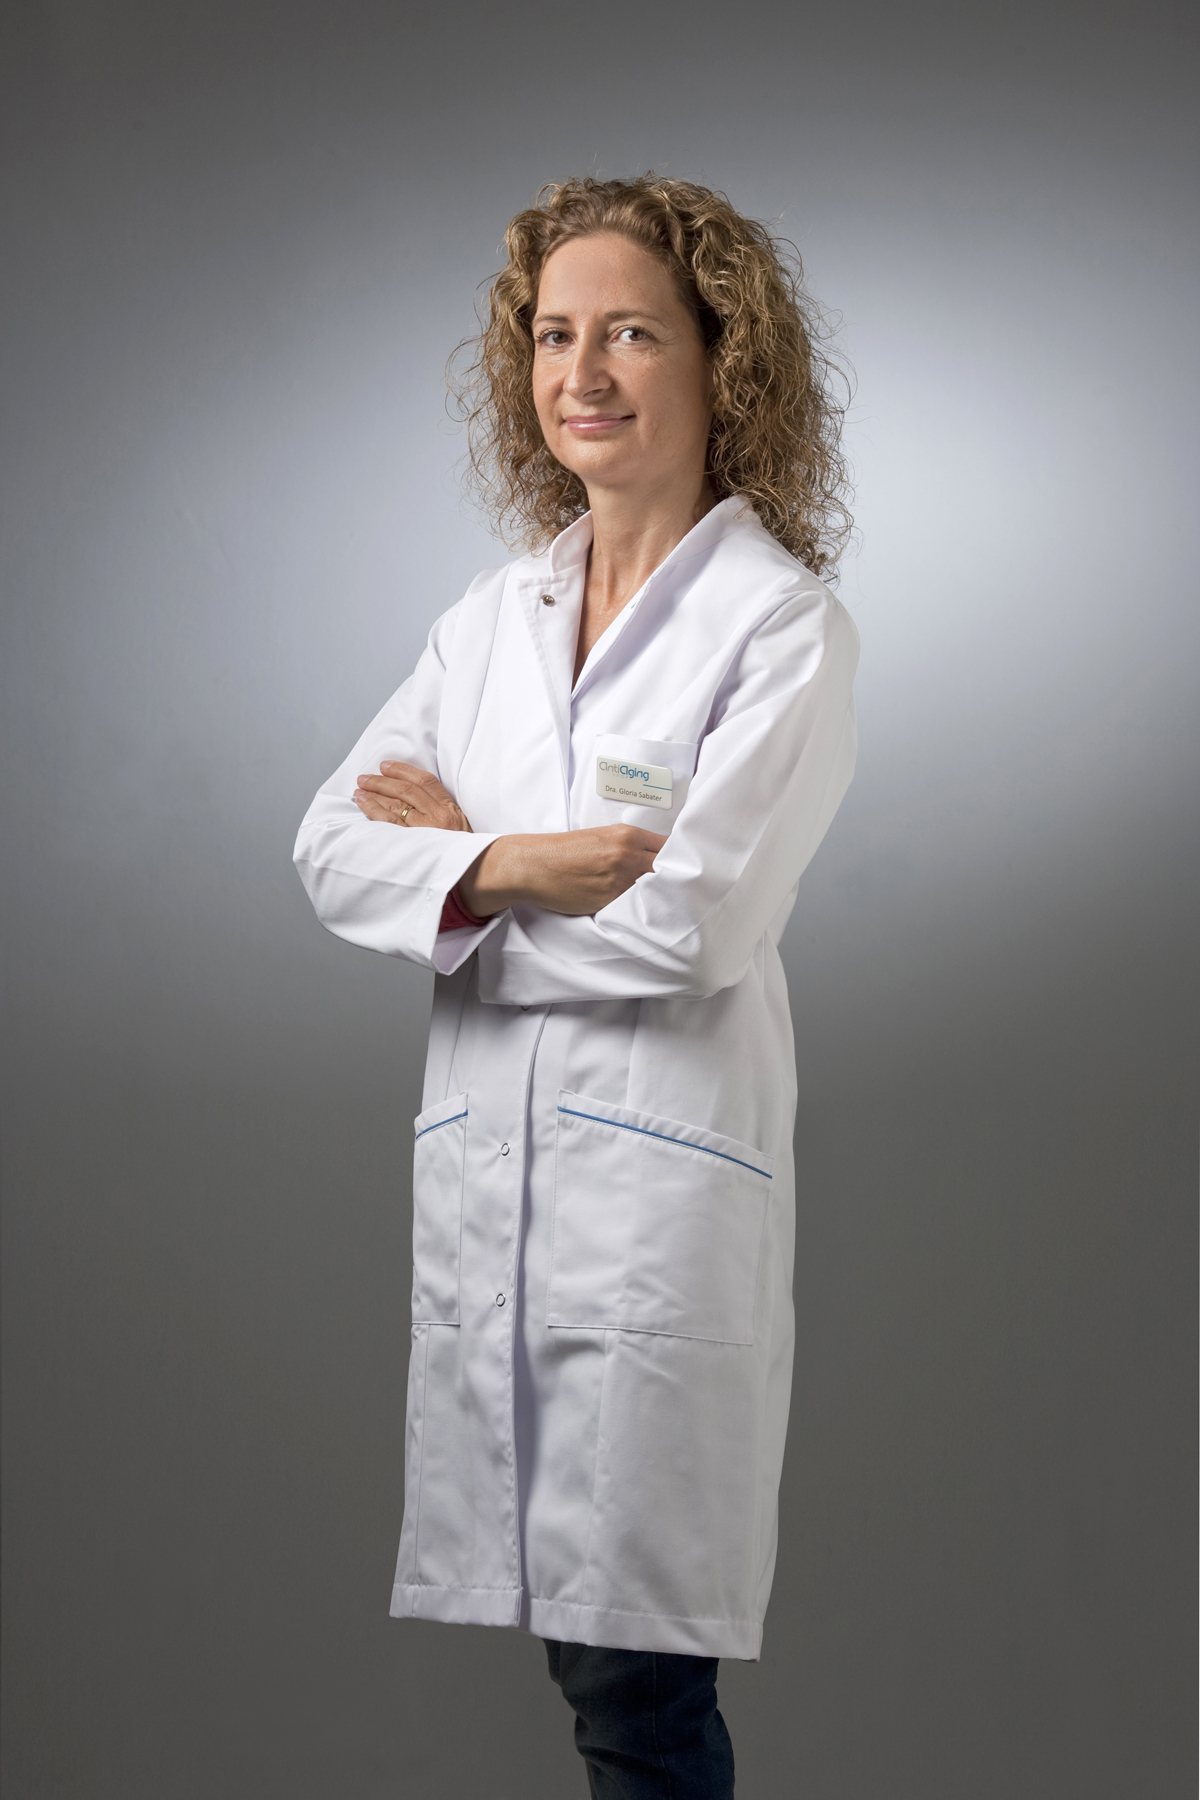 Dr Sabater is an international representative for the World Society of Anti-Ageing Medicine (WOSAM) / biofuncionalismo.com